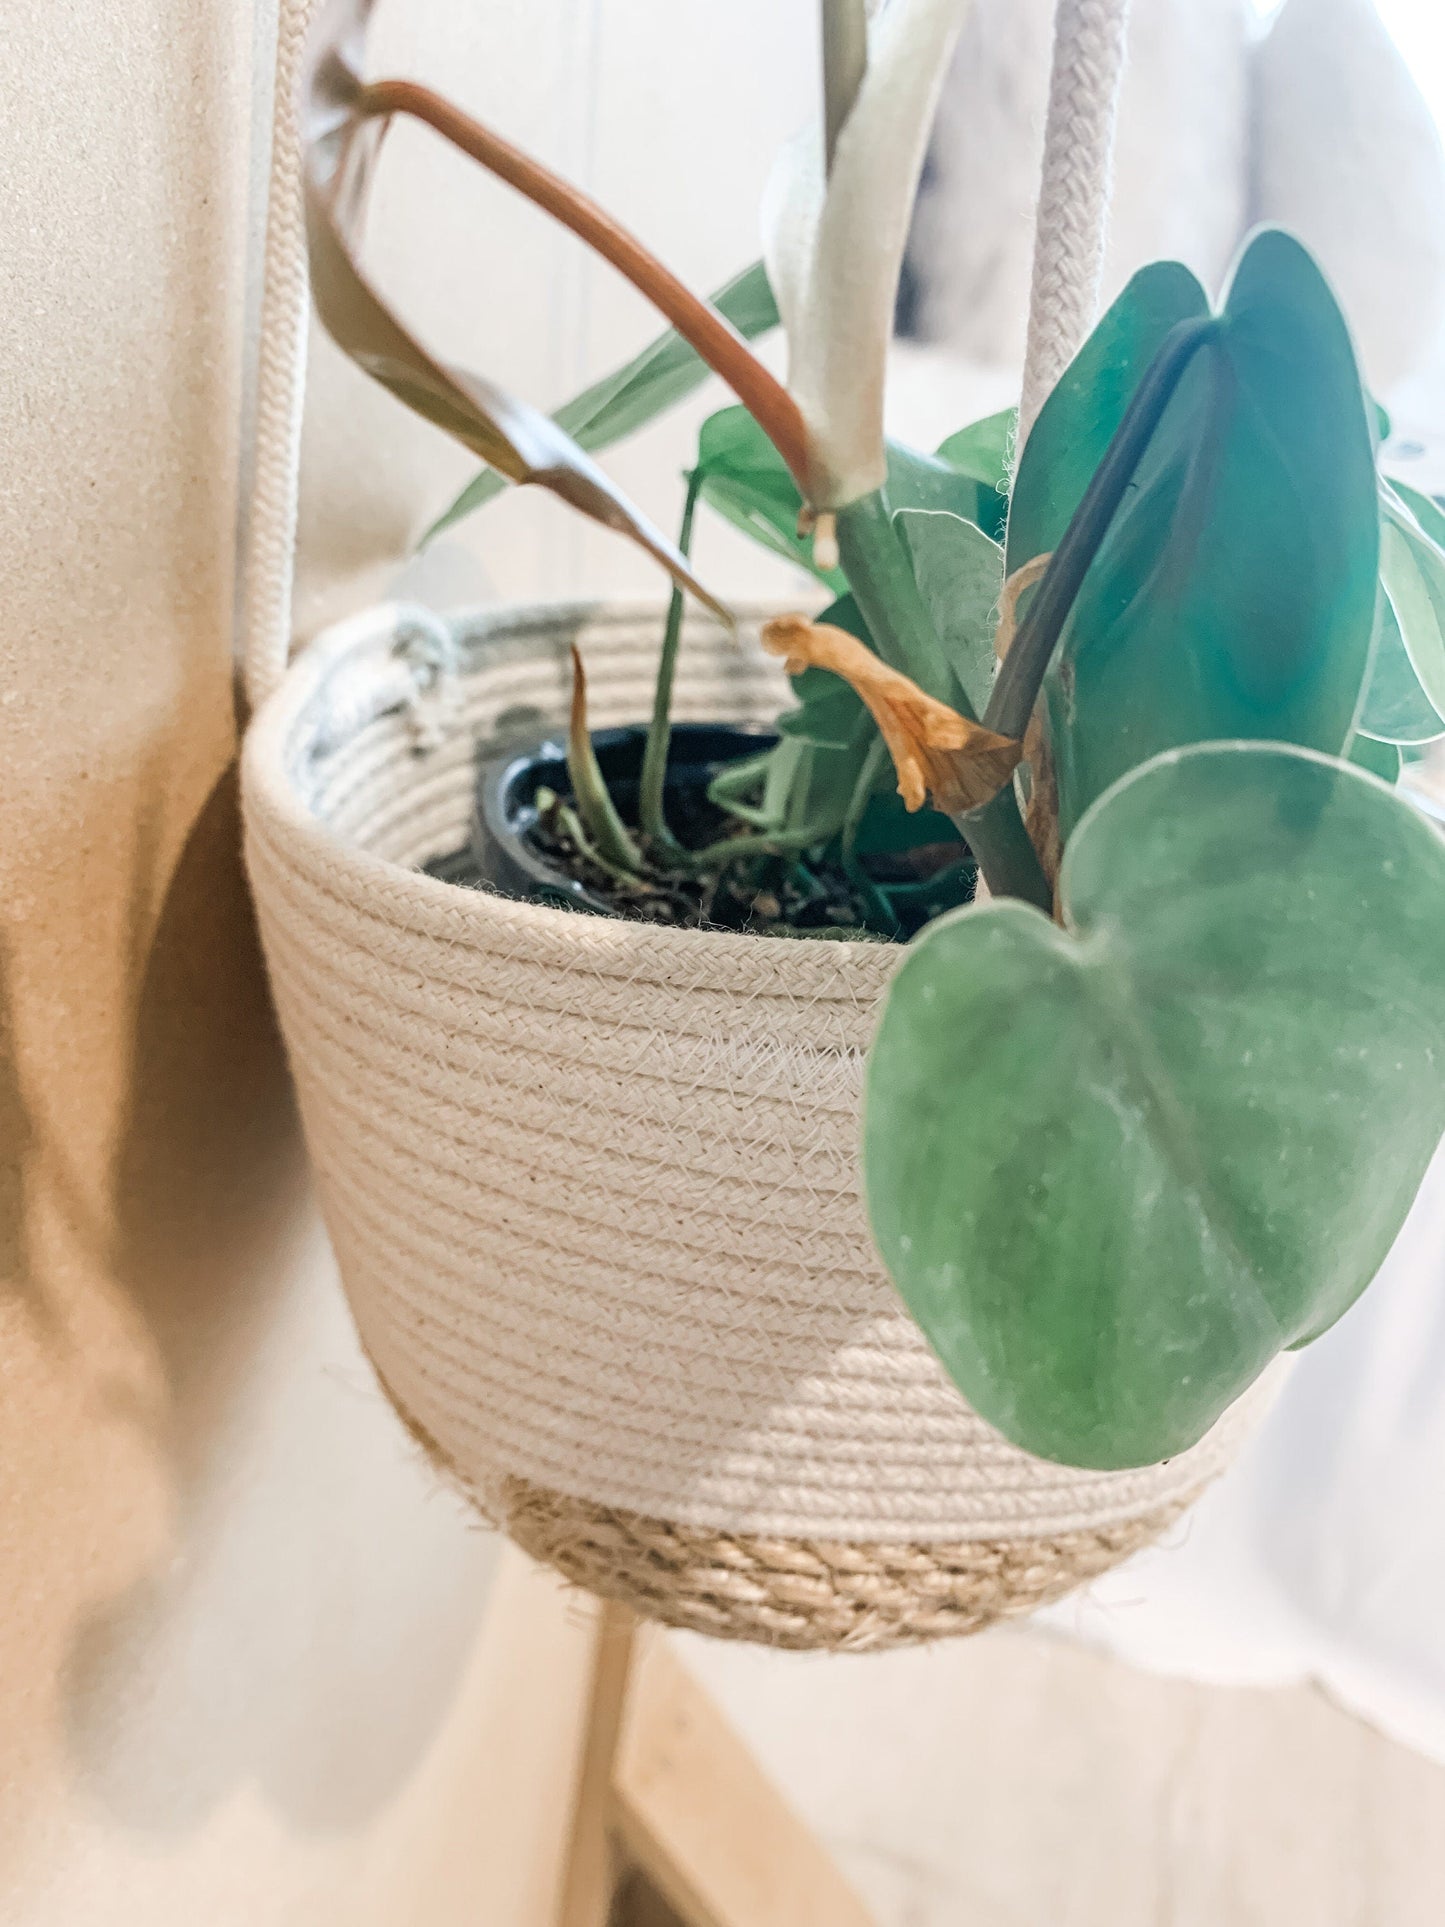 4 inch Cotton/Jute Hanging Basket Planter - Handmade